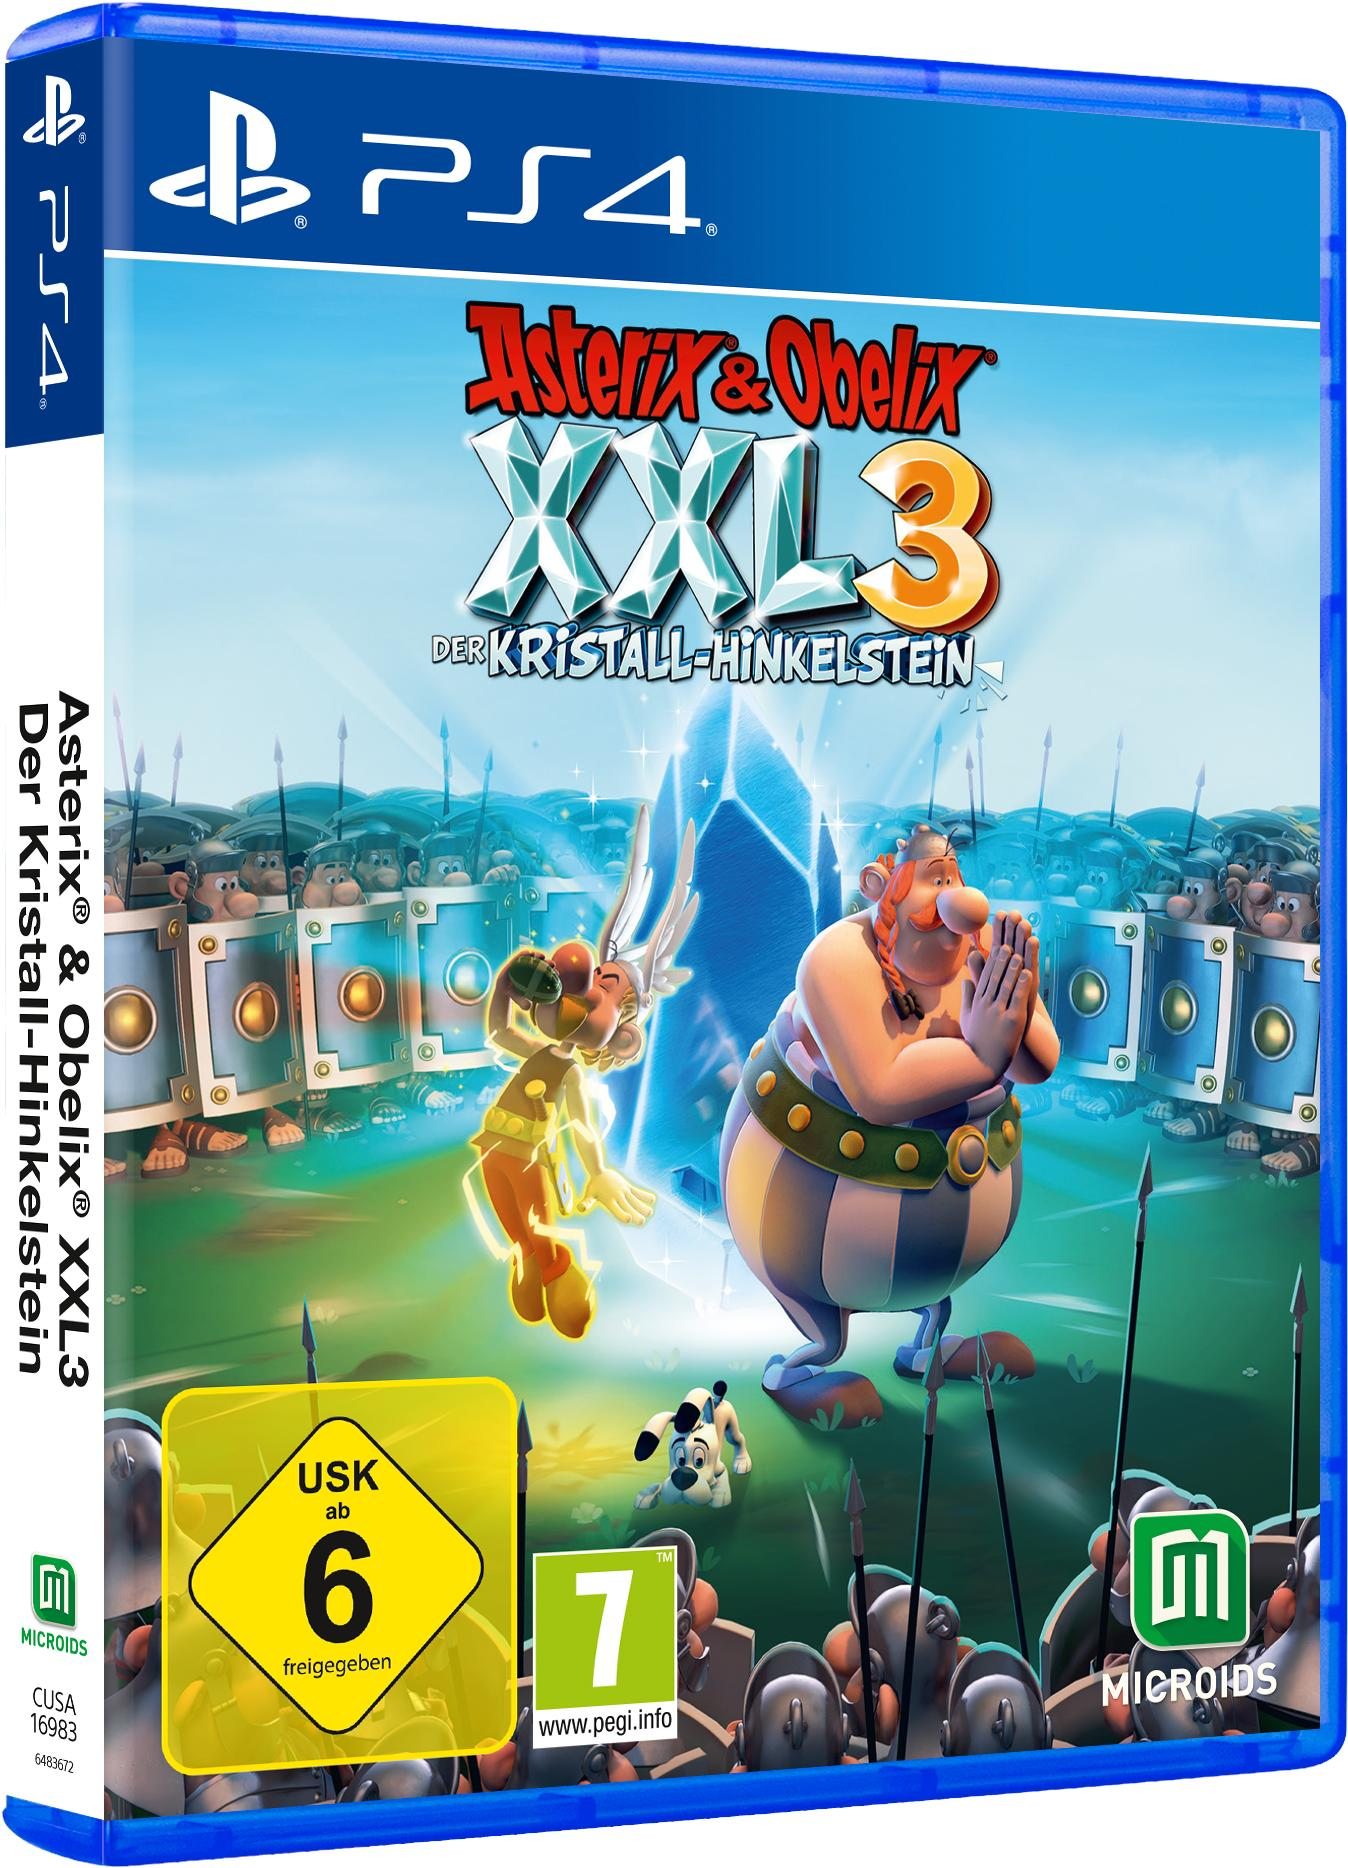 Asterix & Obelix XXL3: [PlayStation Der 4] Kristall-Hinkelstein 